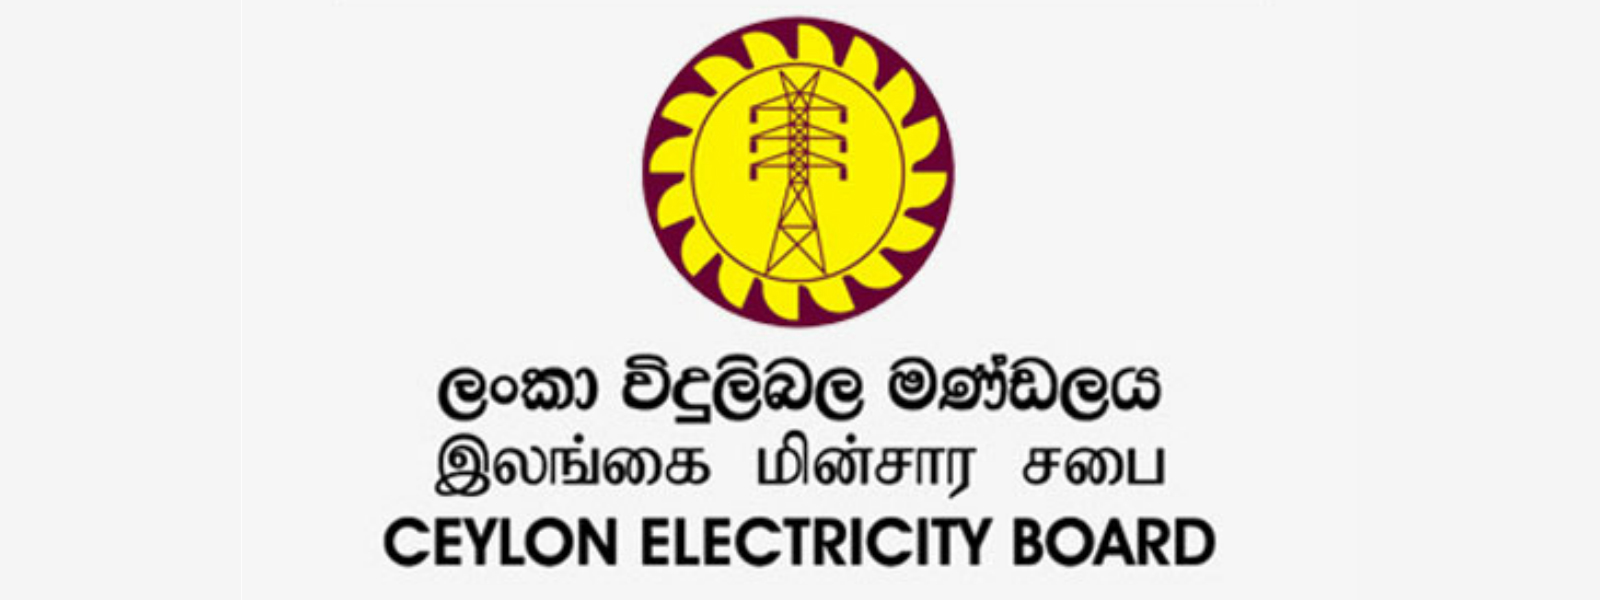 Rakitha Jayawardena appointed as CEB Chairman